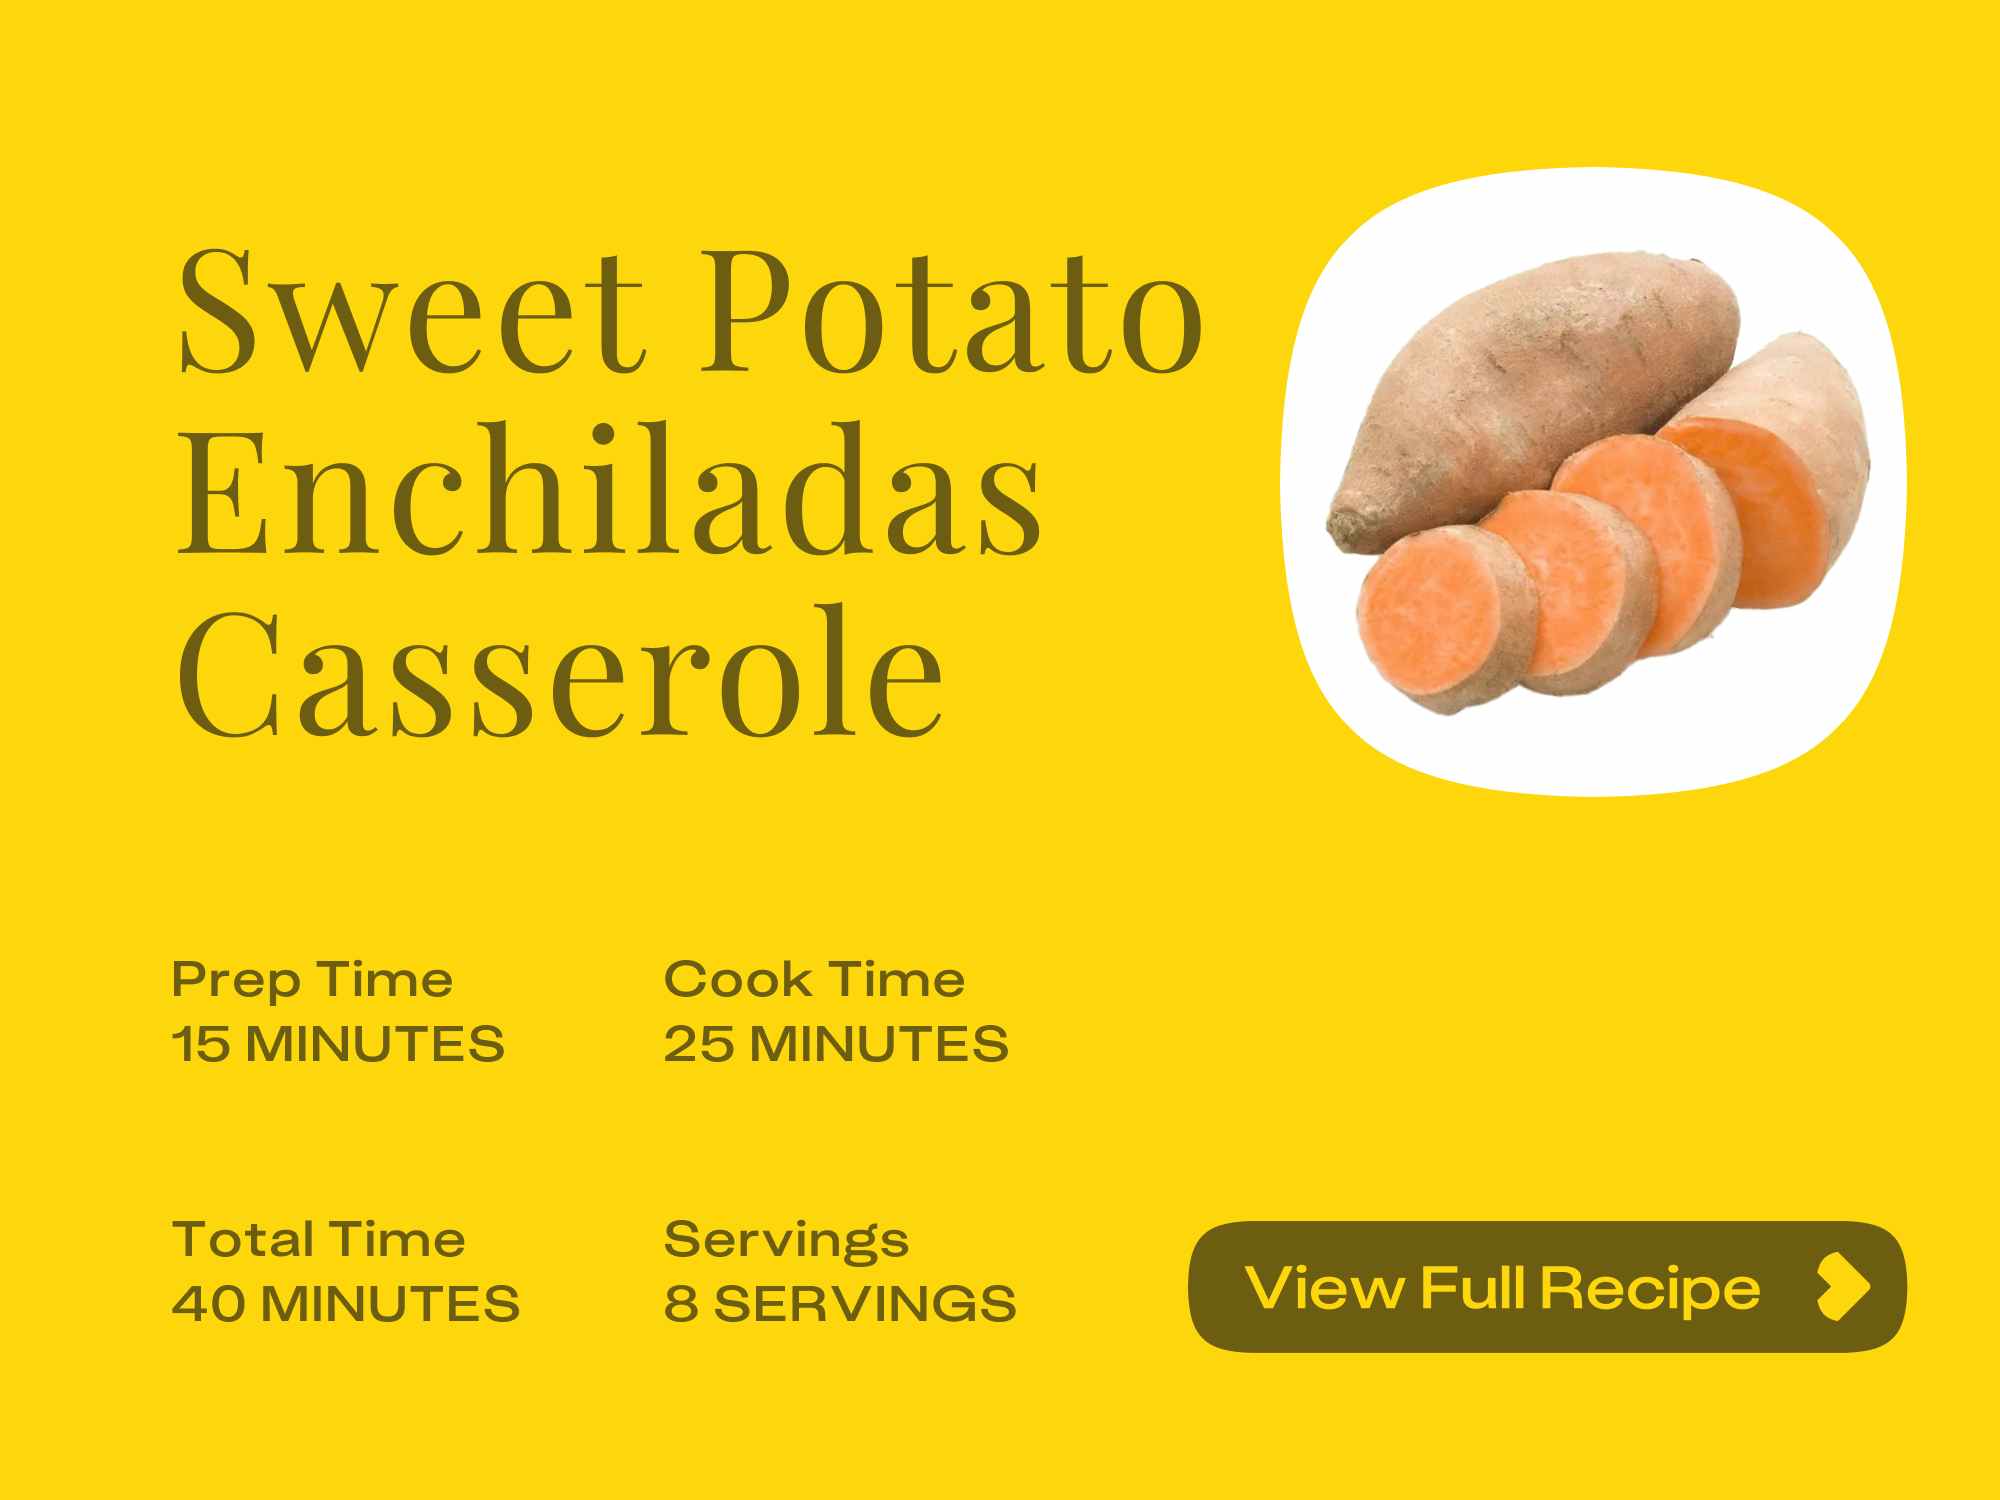 https://prod-cdn-thekrazycouponlady.imgix.net/wp-content/uploads/2015/10/sweet-potato-enchiladas-skillet-casserole-recipe-card-graphic-1698069998-1698069998.png?auto=format&fit=fill&q=25